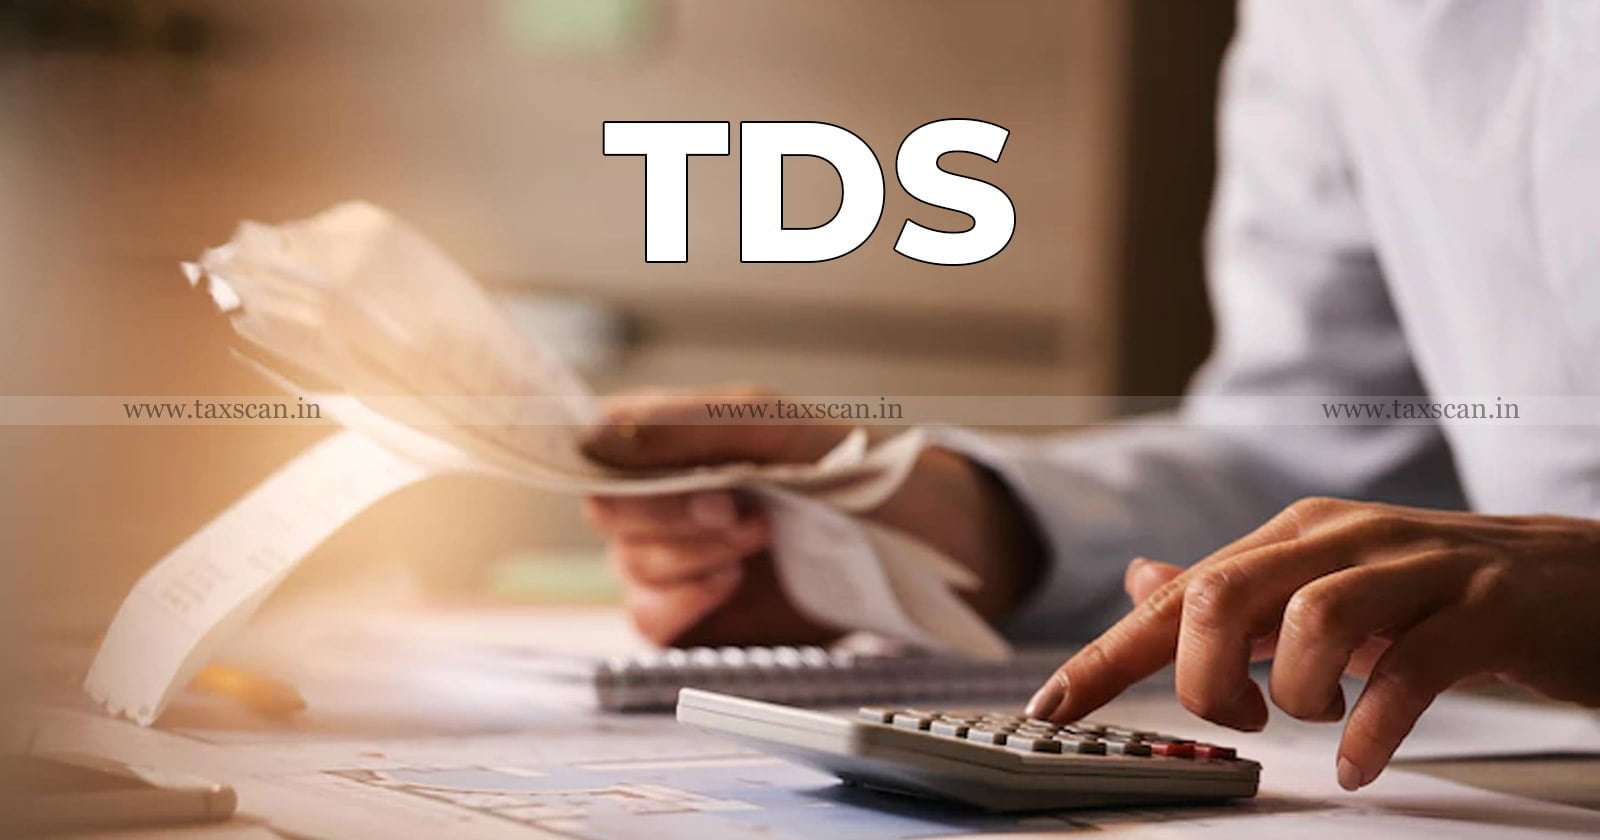 TDS - DDIT(E) - ITAT - Income Tax Addition - Income Tax - Tax - Taxscan